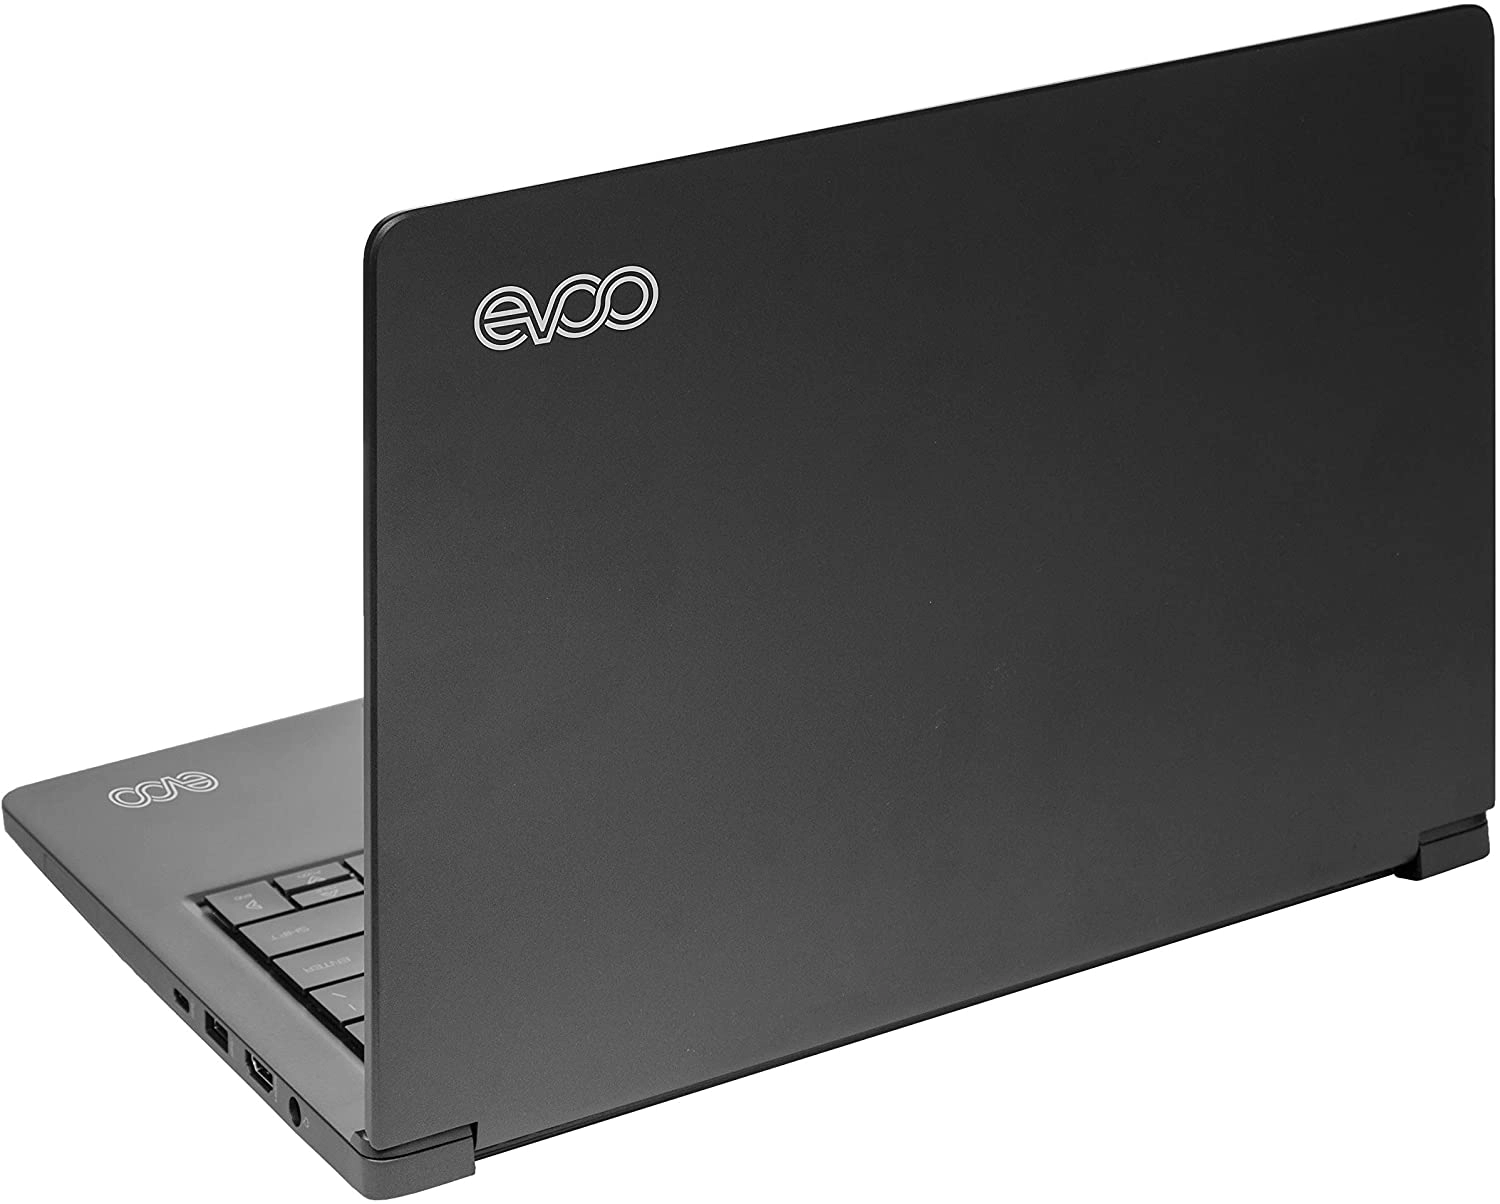 Evoo Elite Series laptop image